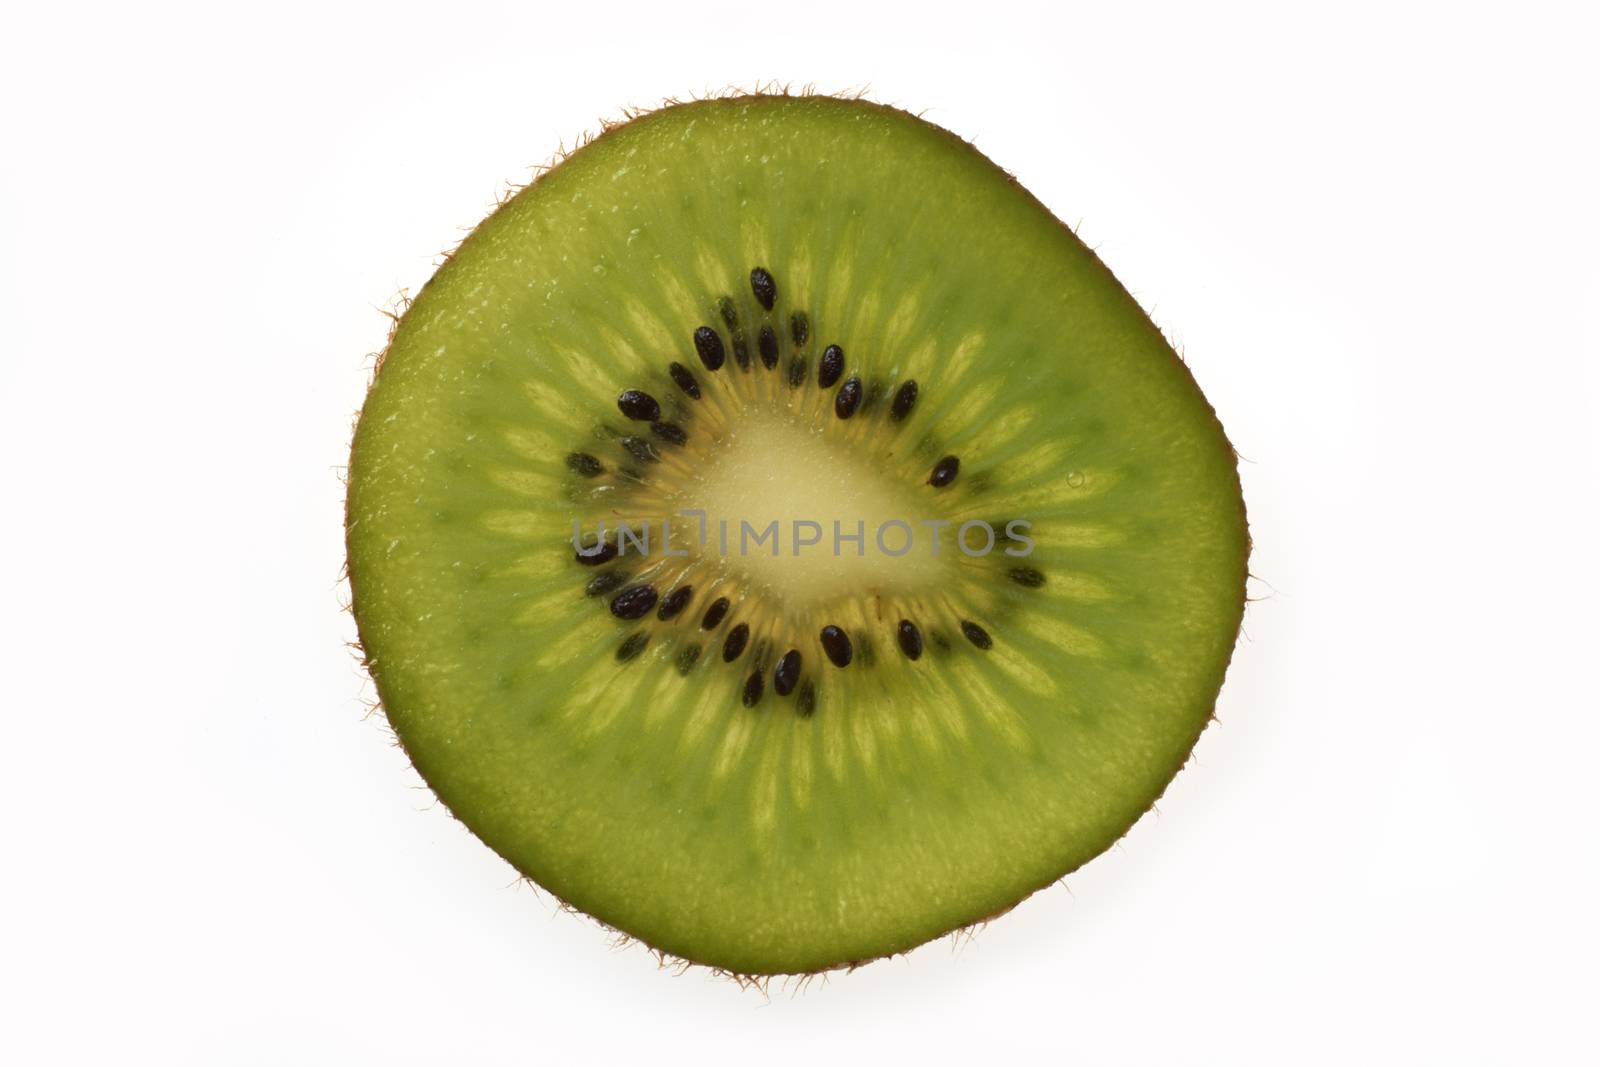 Overhead view of slice of kiwi fruit on plain background